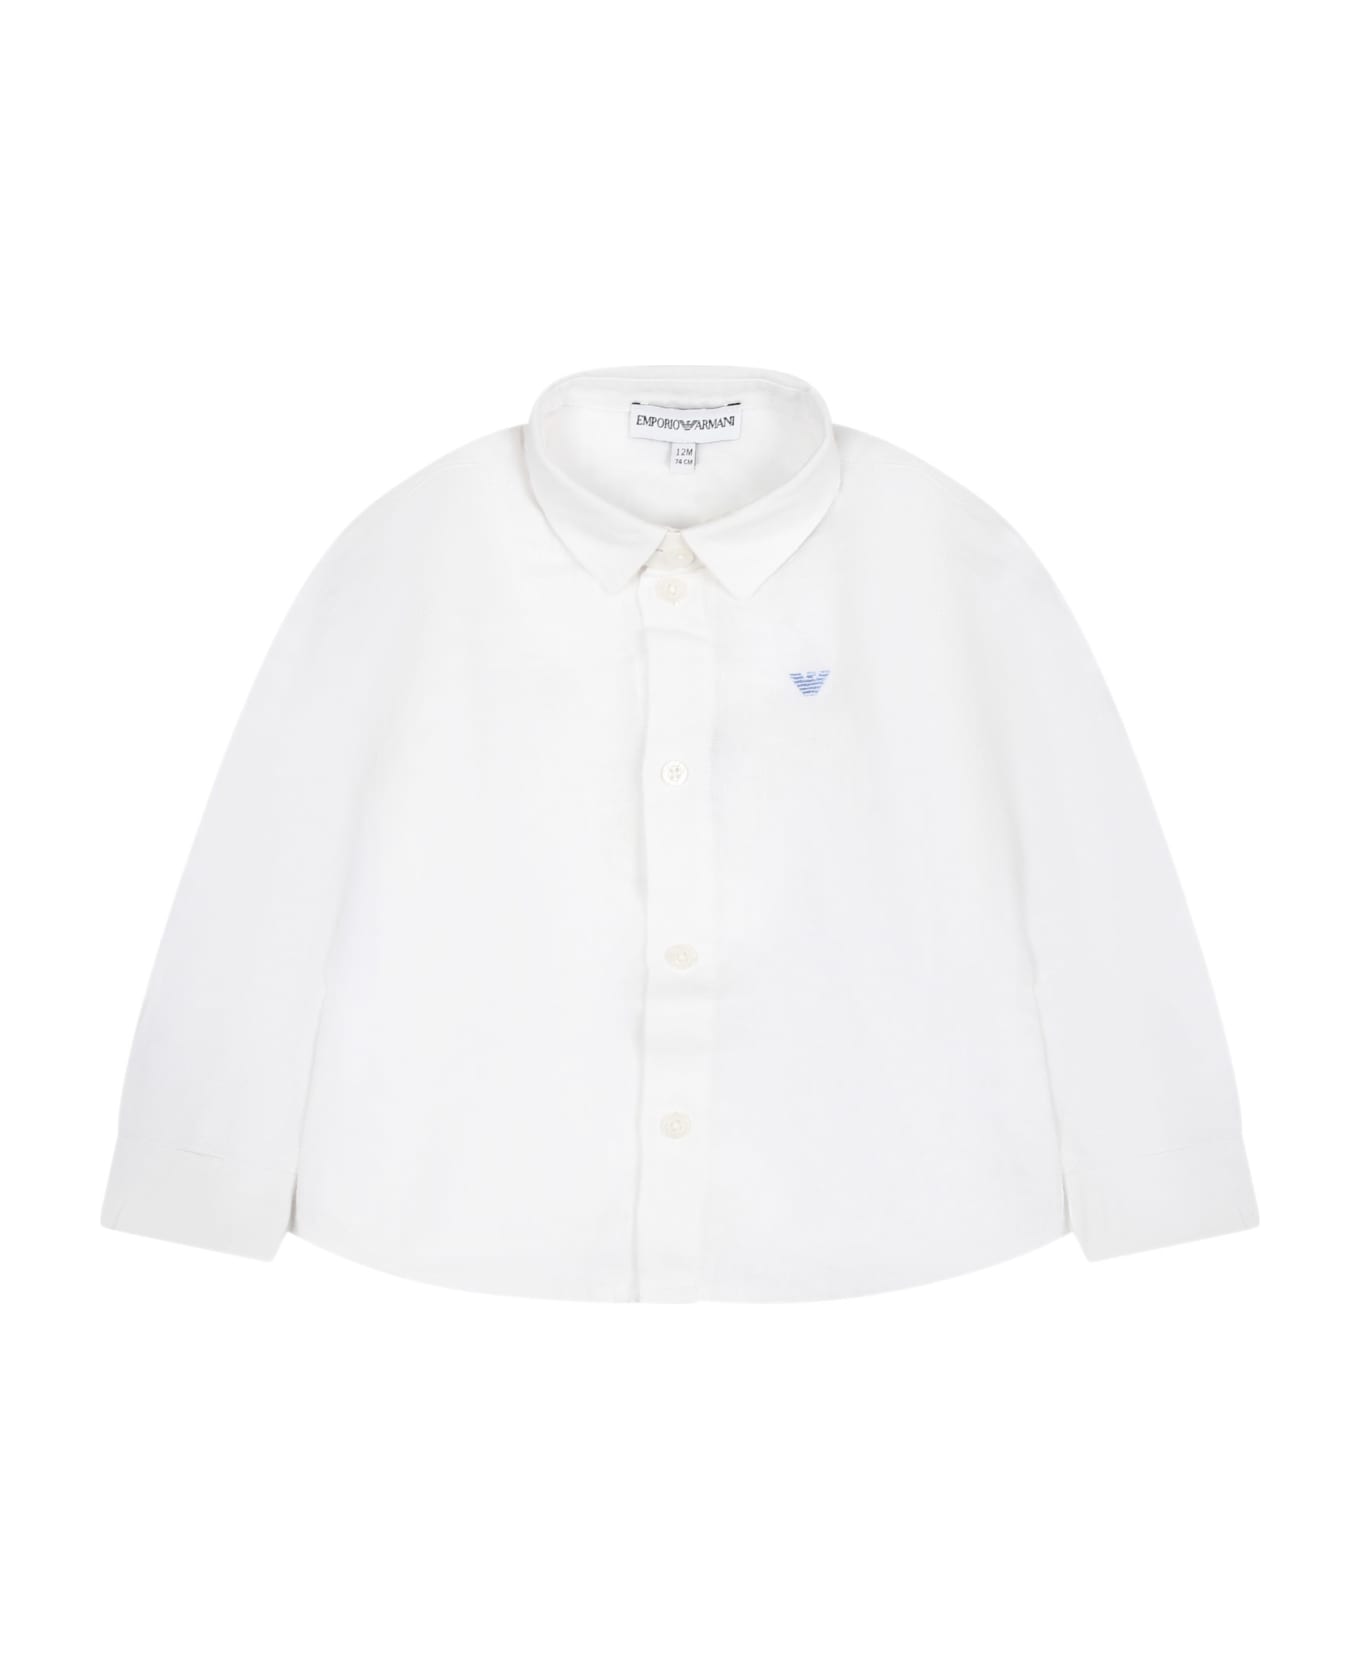 Emporio Armani White Shirt For Baby Boy With Iconic Eagle - White